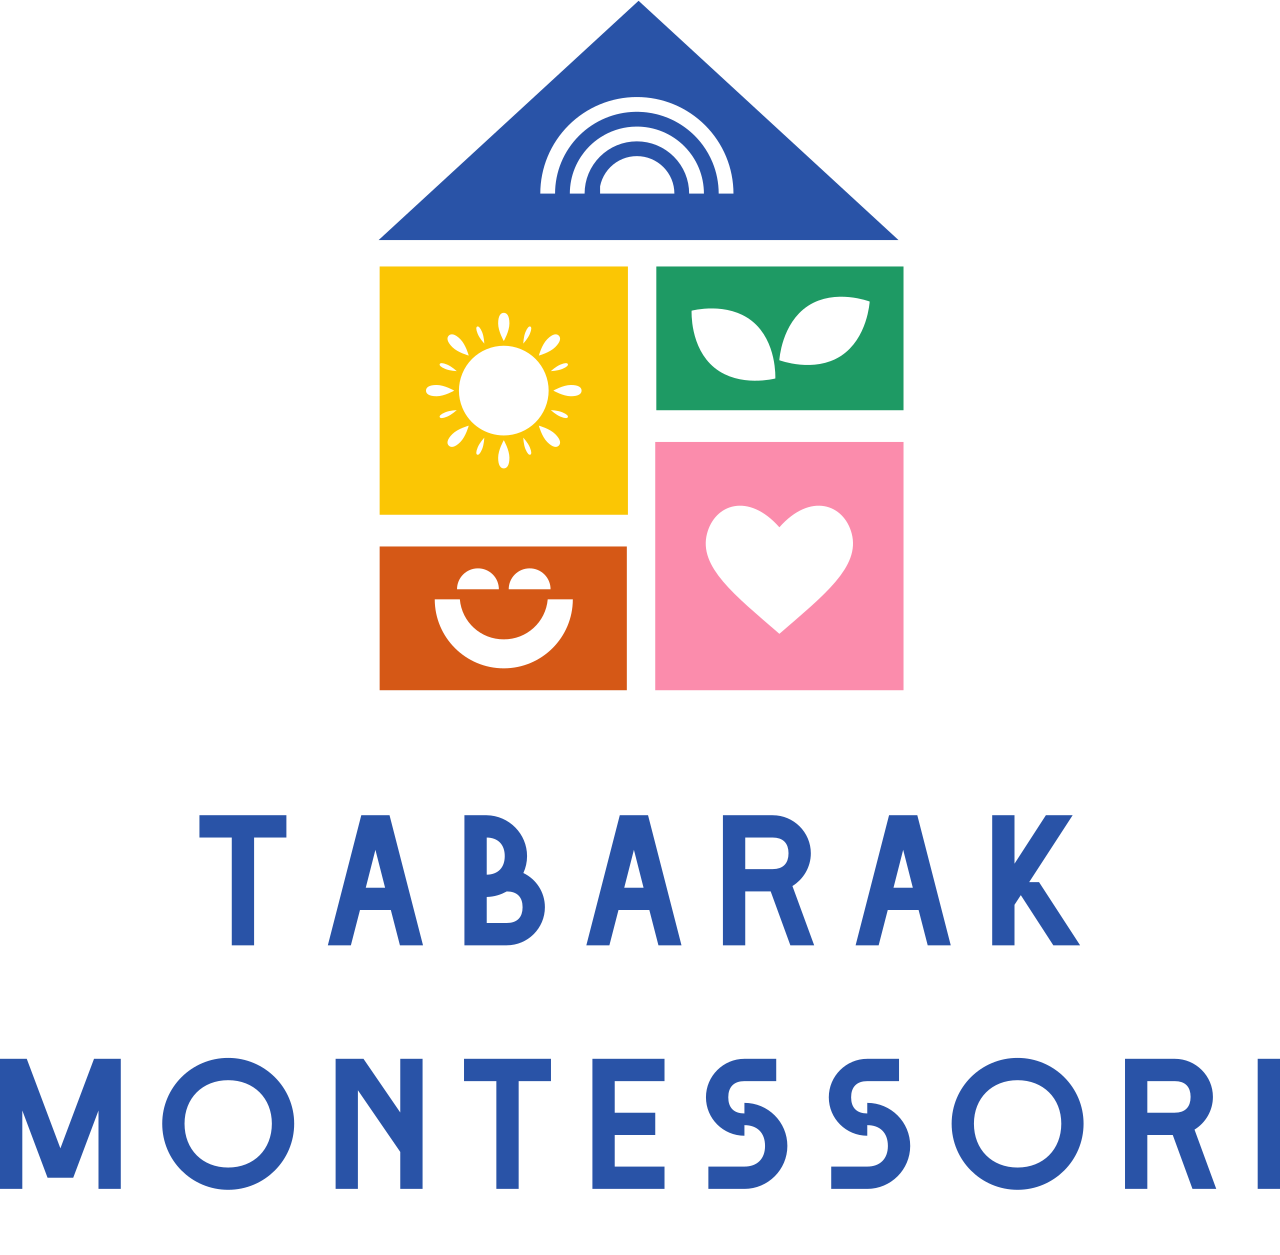 Tabarak
Montessori's logo